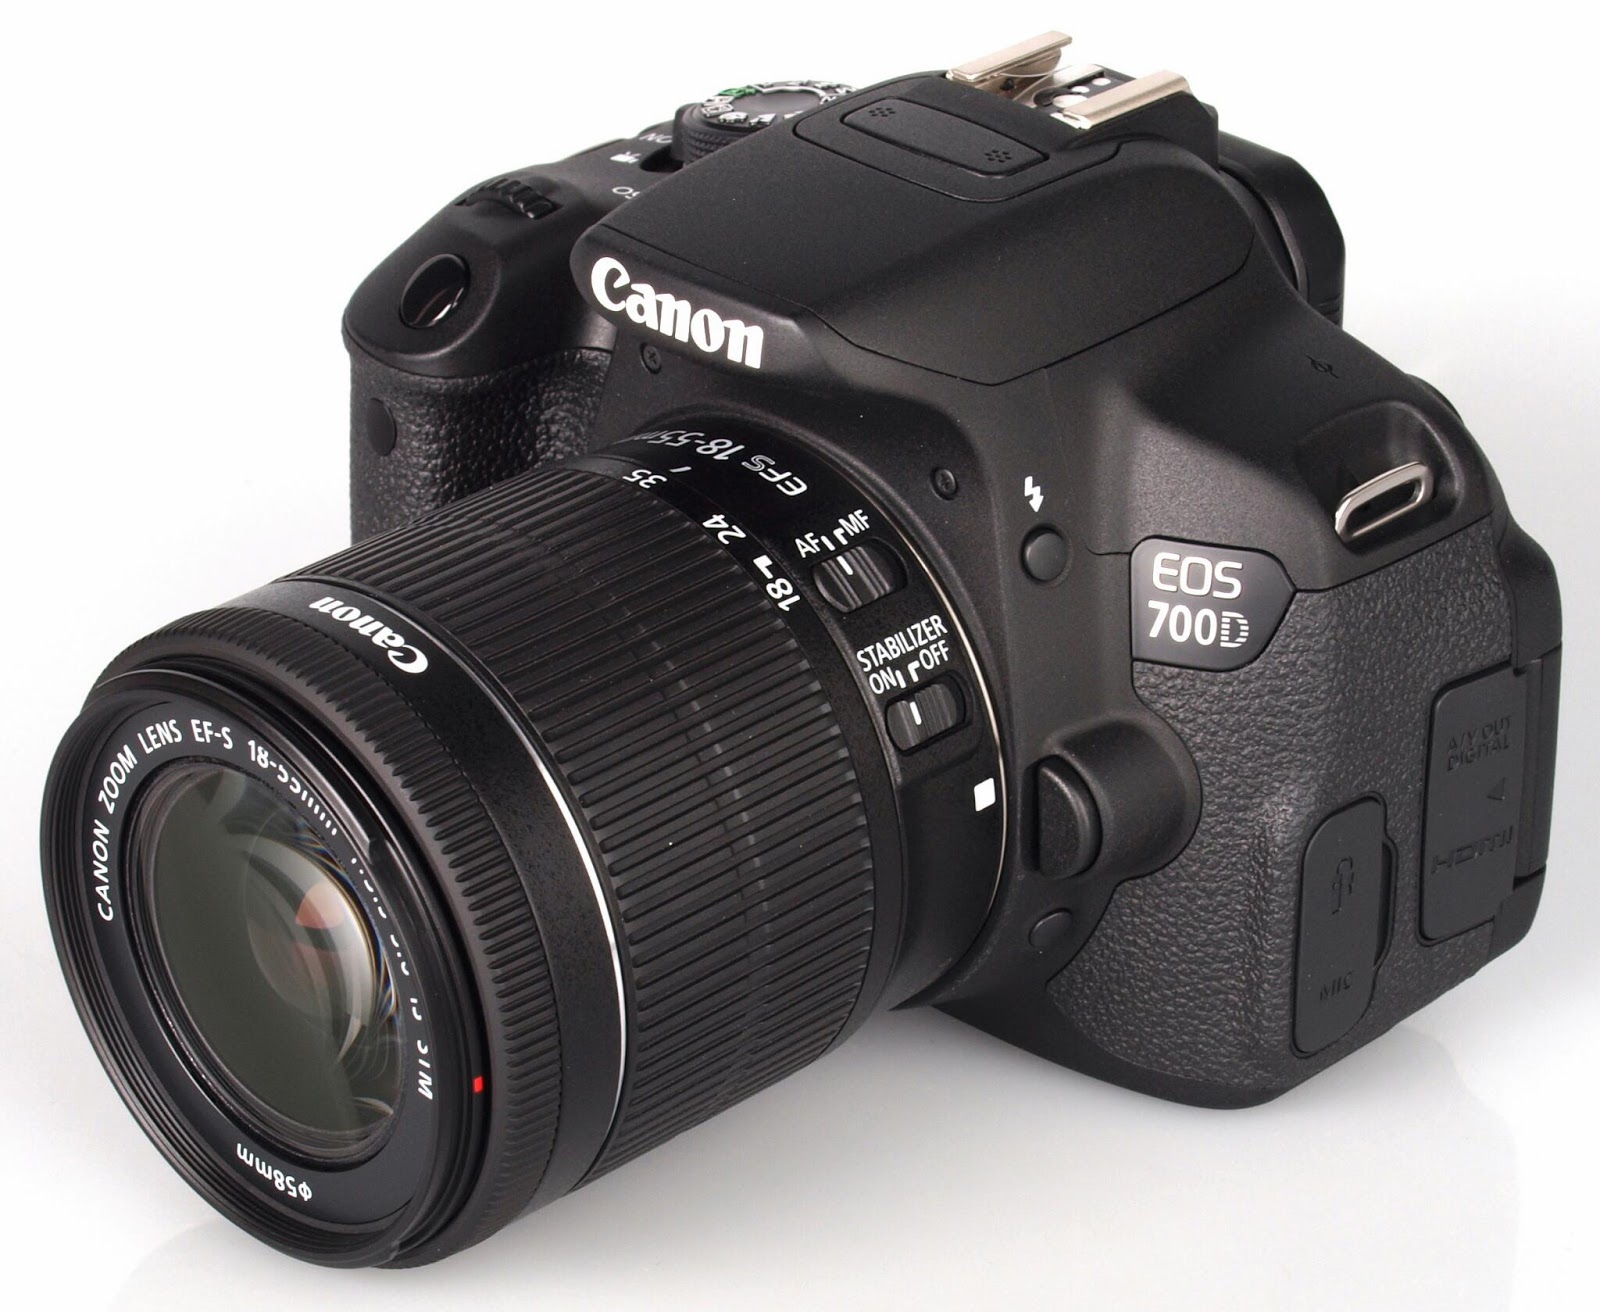 Nikon D5300 VS Canon 700D, Spesifikasi & Harga  PattyBudiman Blog